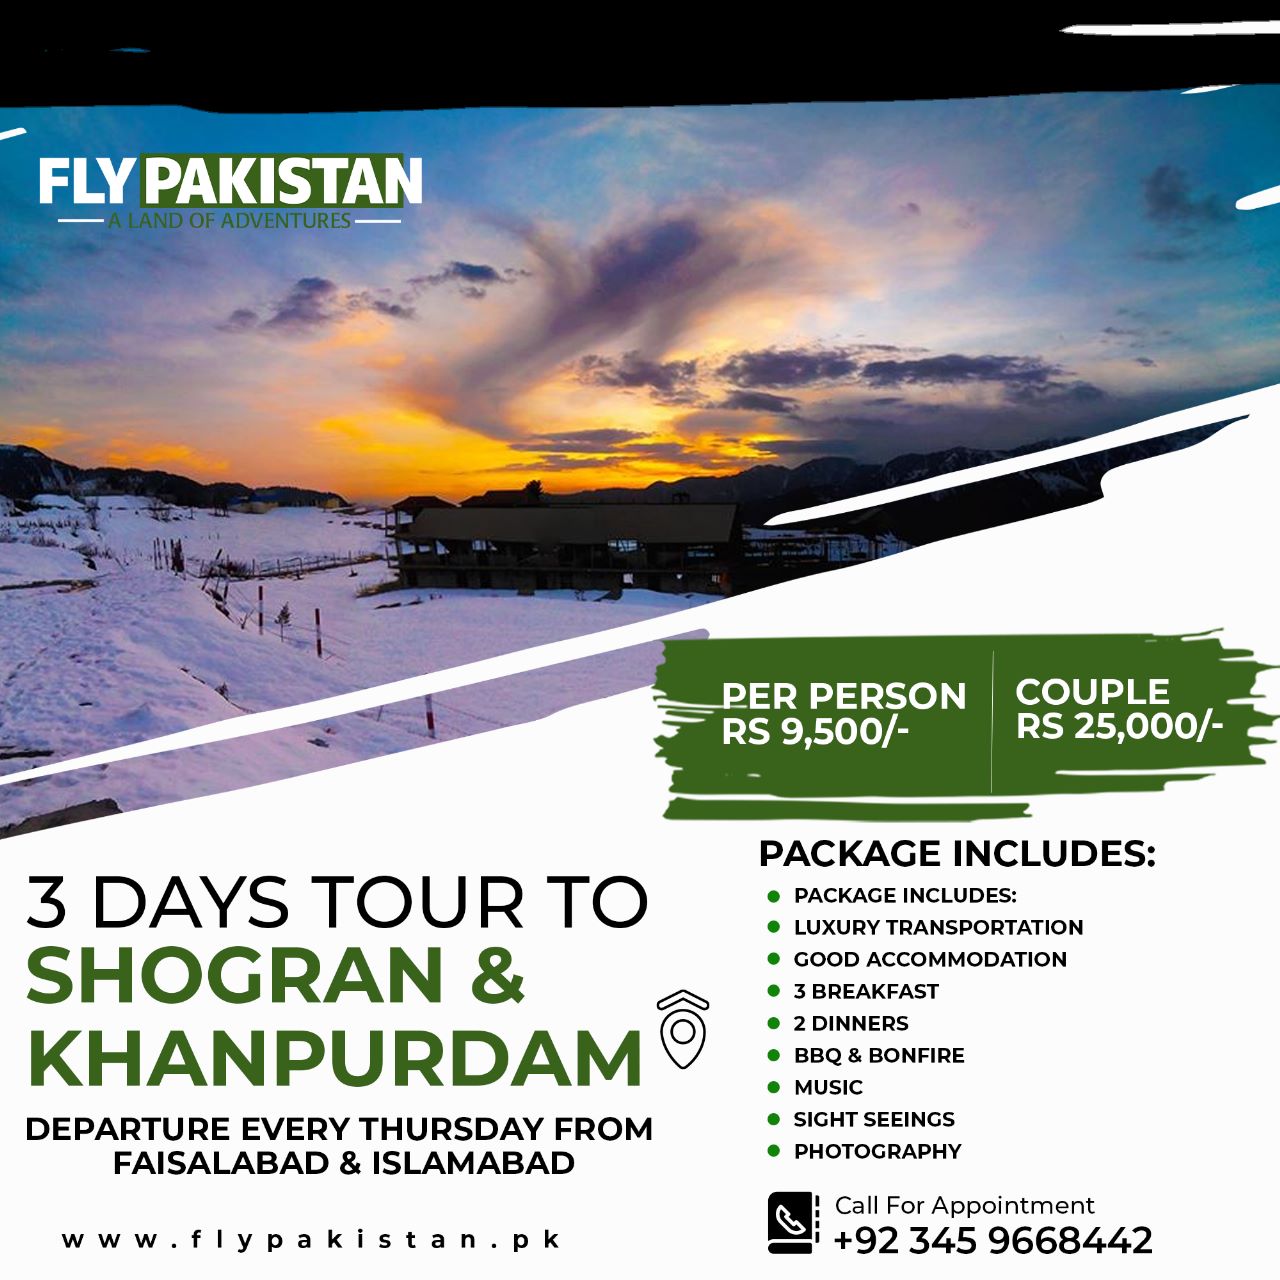 Book Deal 3 Days Winter Tour To Shogran & Khanpur Dam